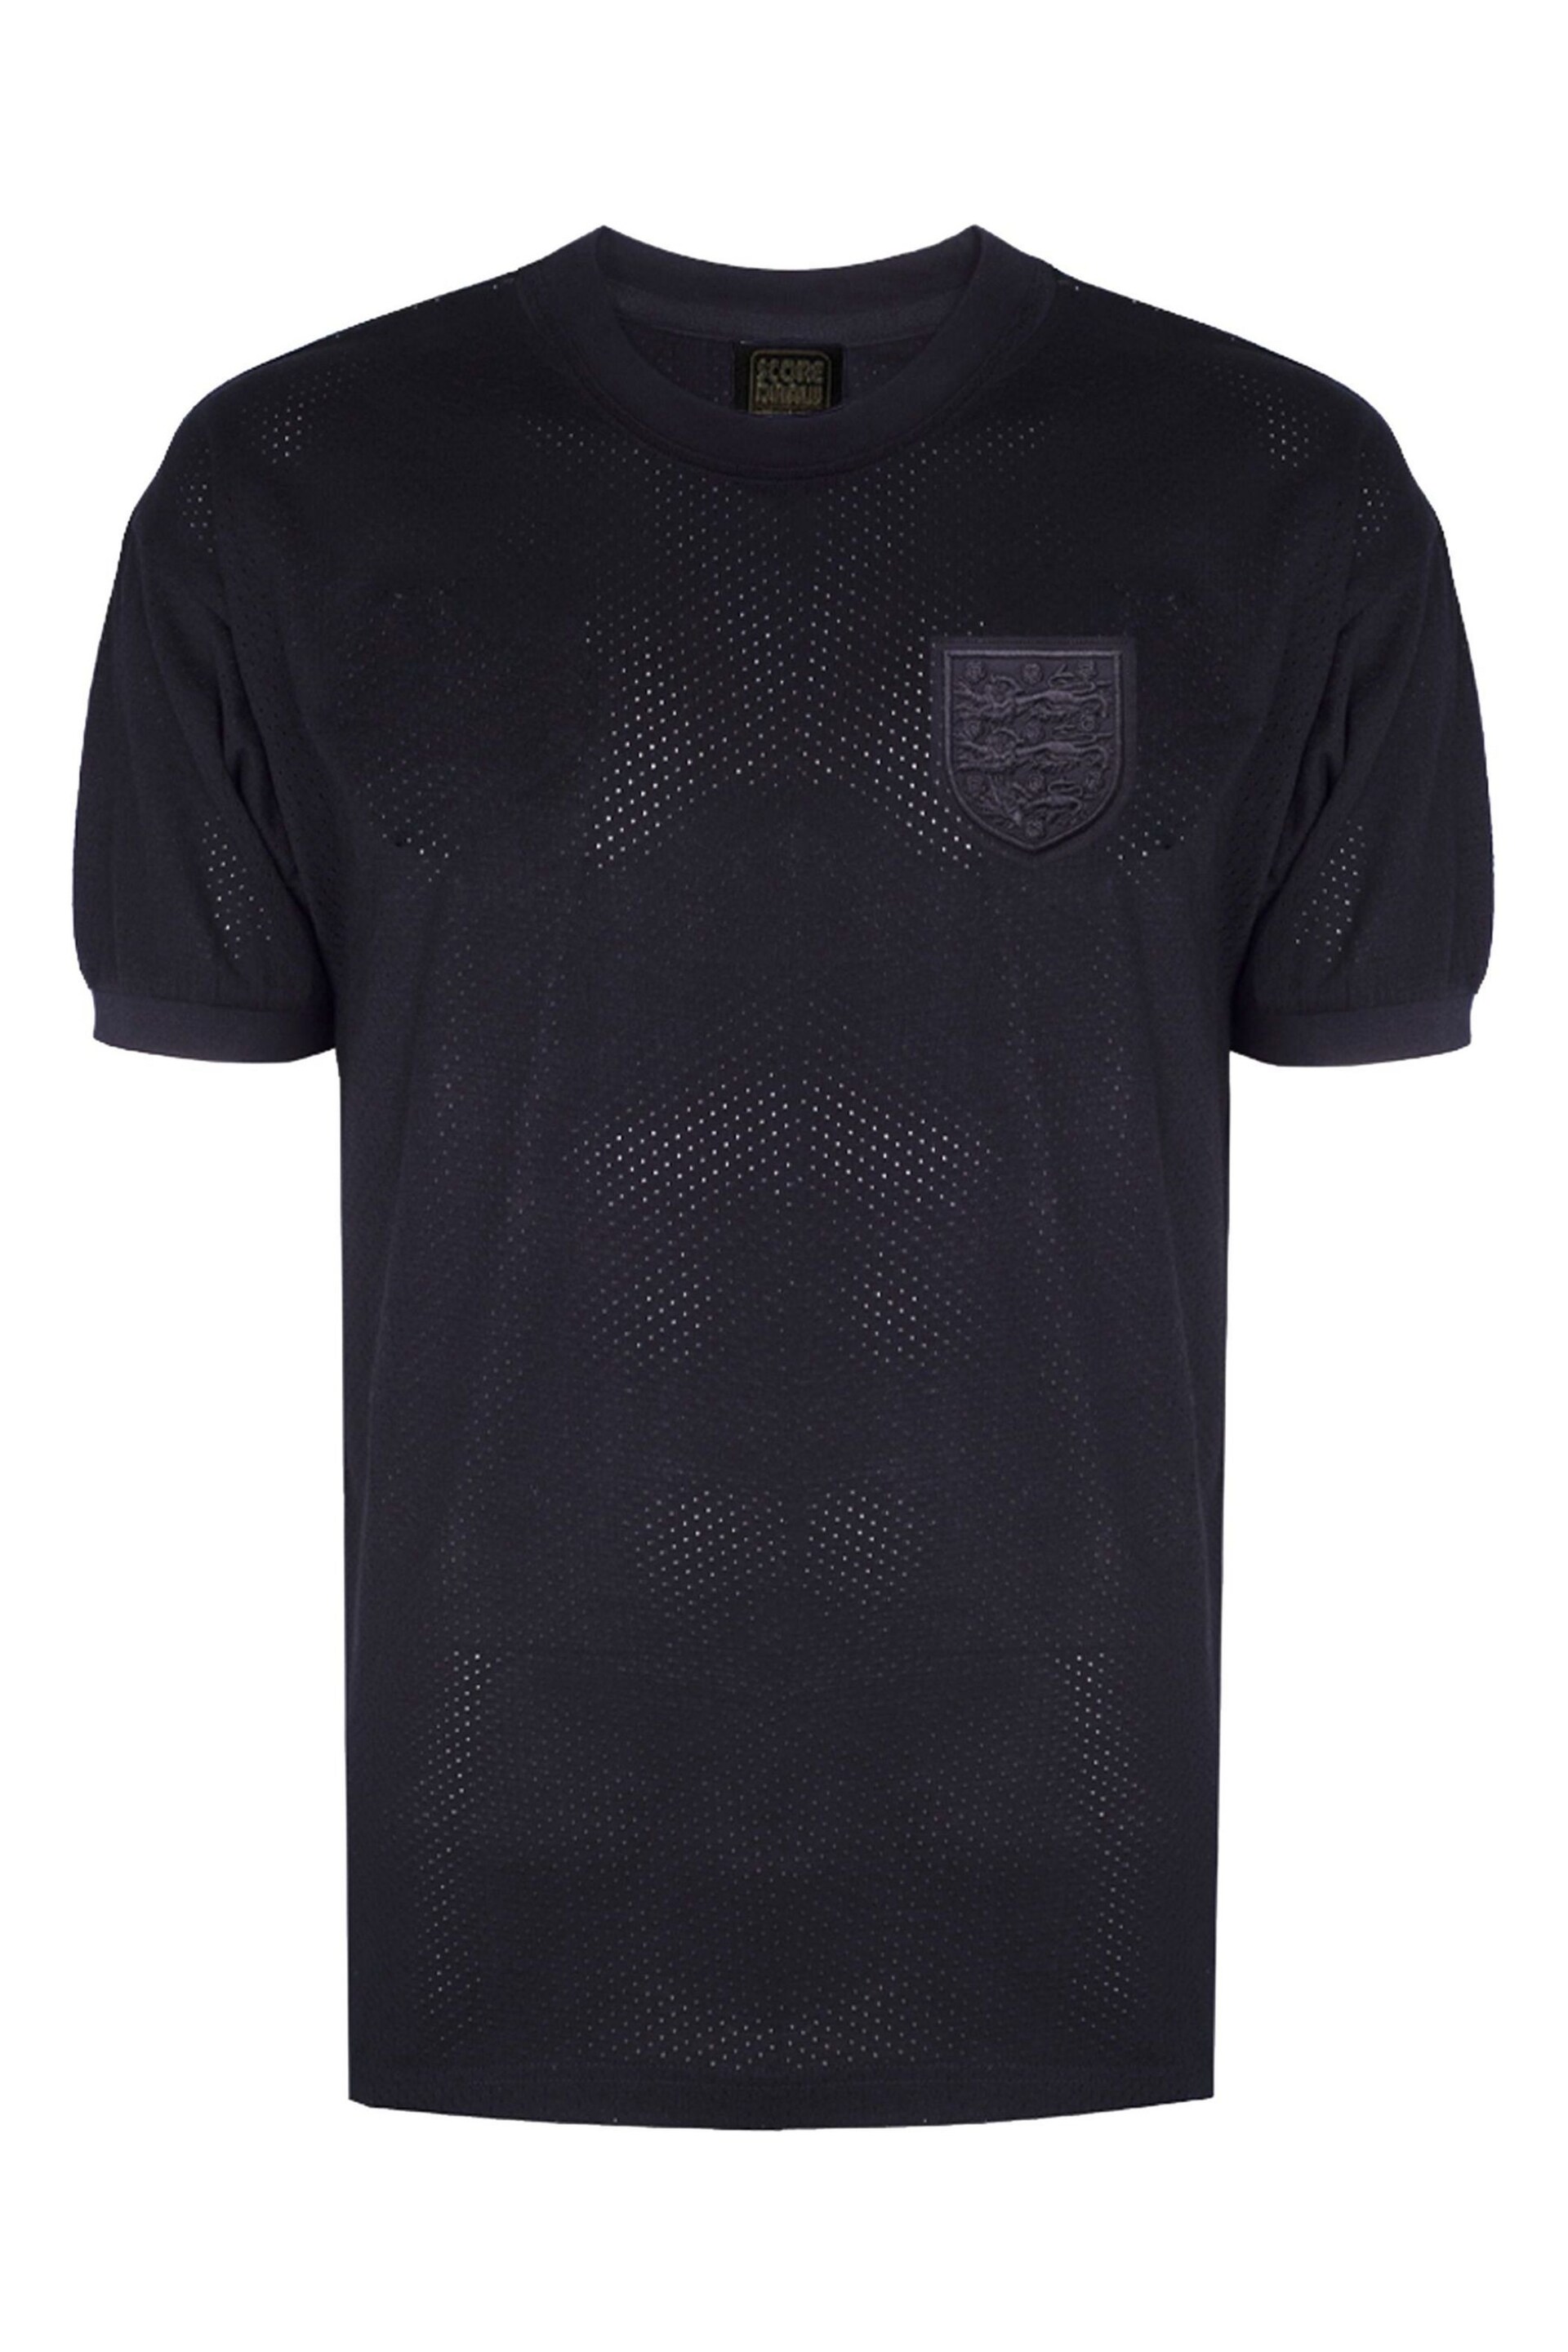 Score Draw England 1970 Black Football Shirt - Image 2 of 6